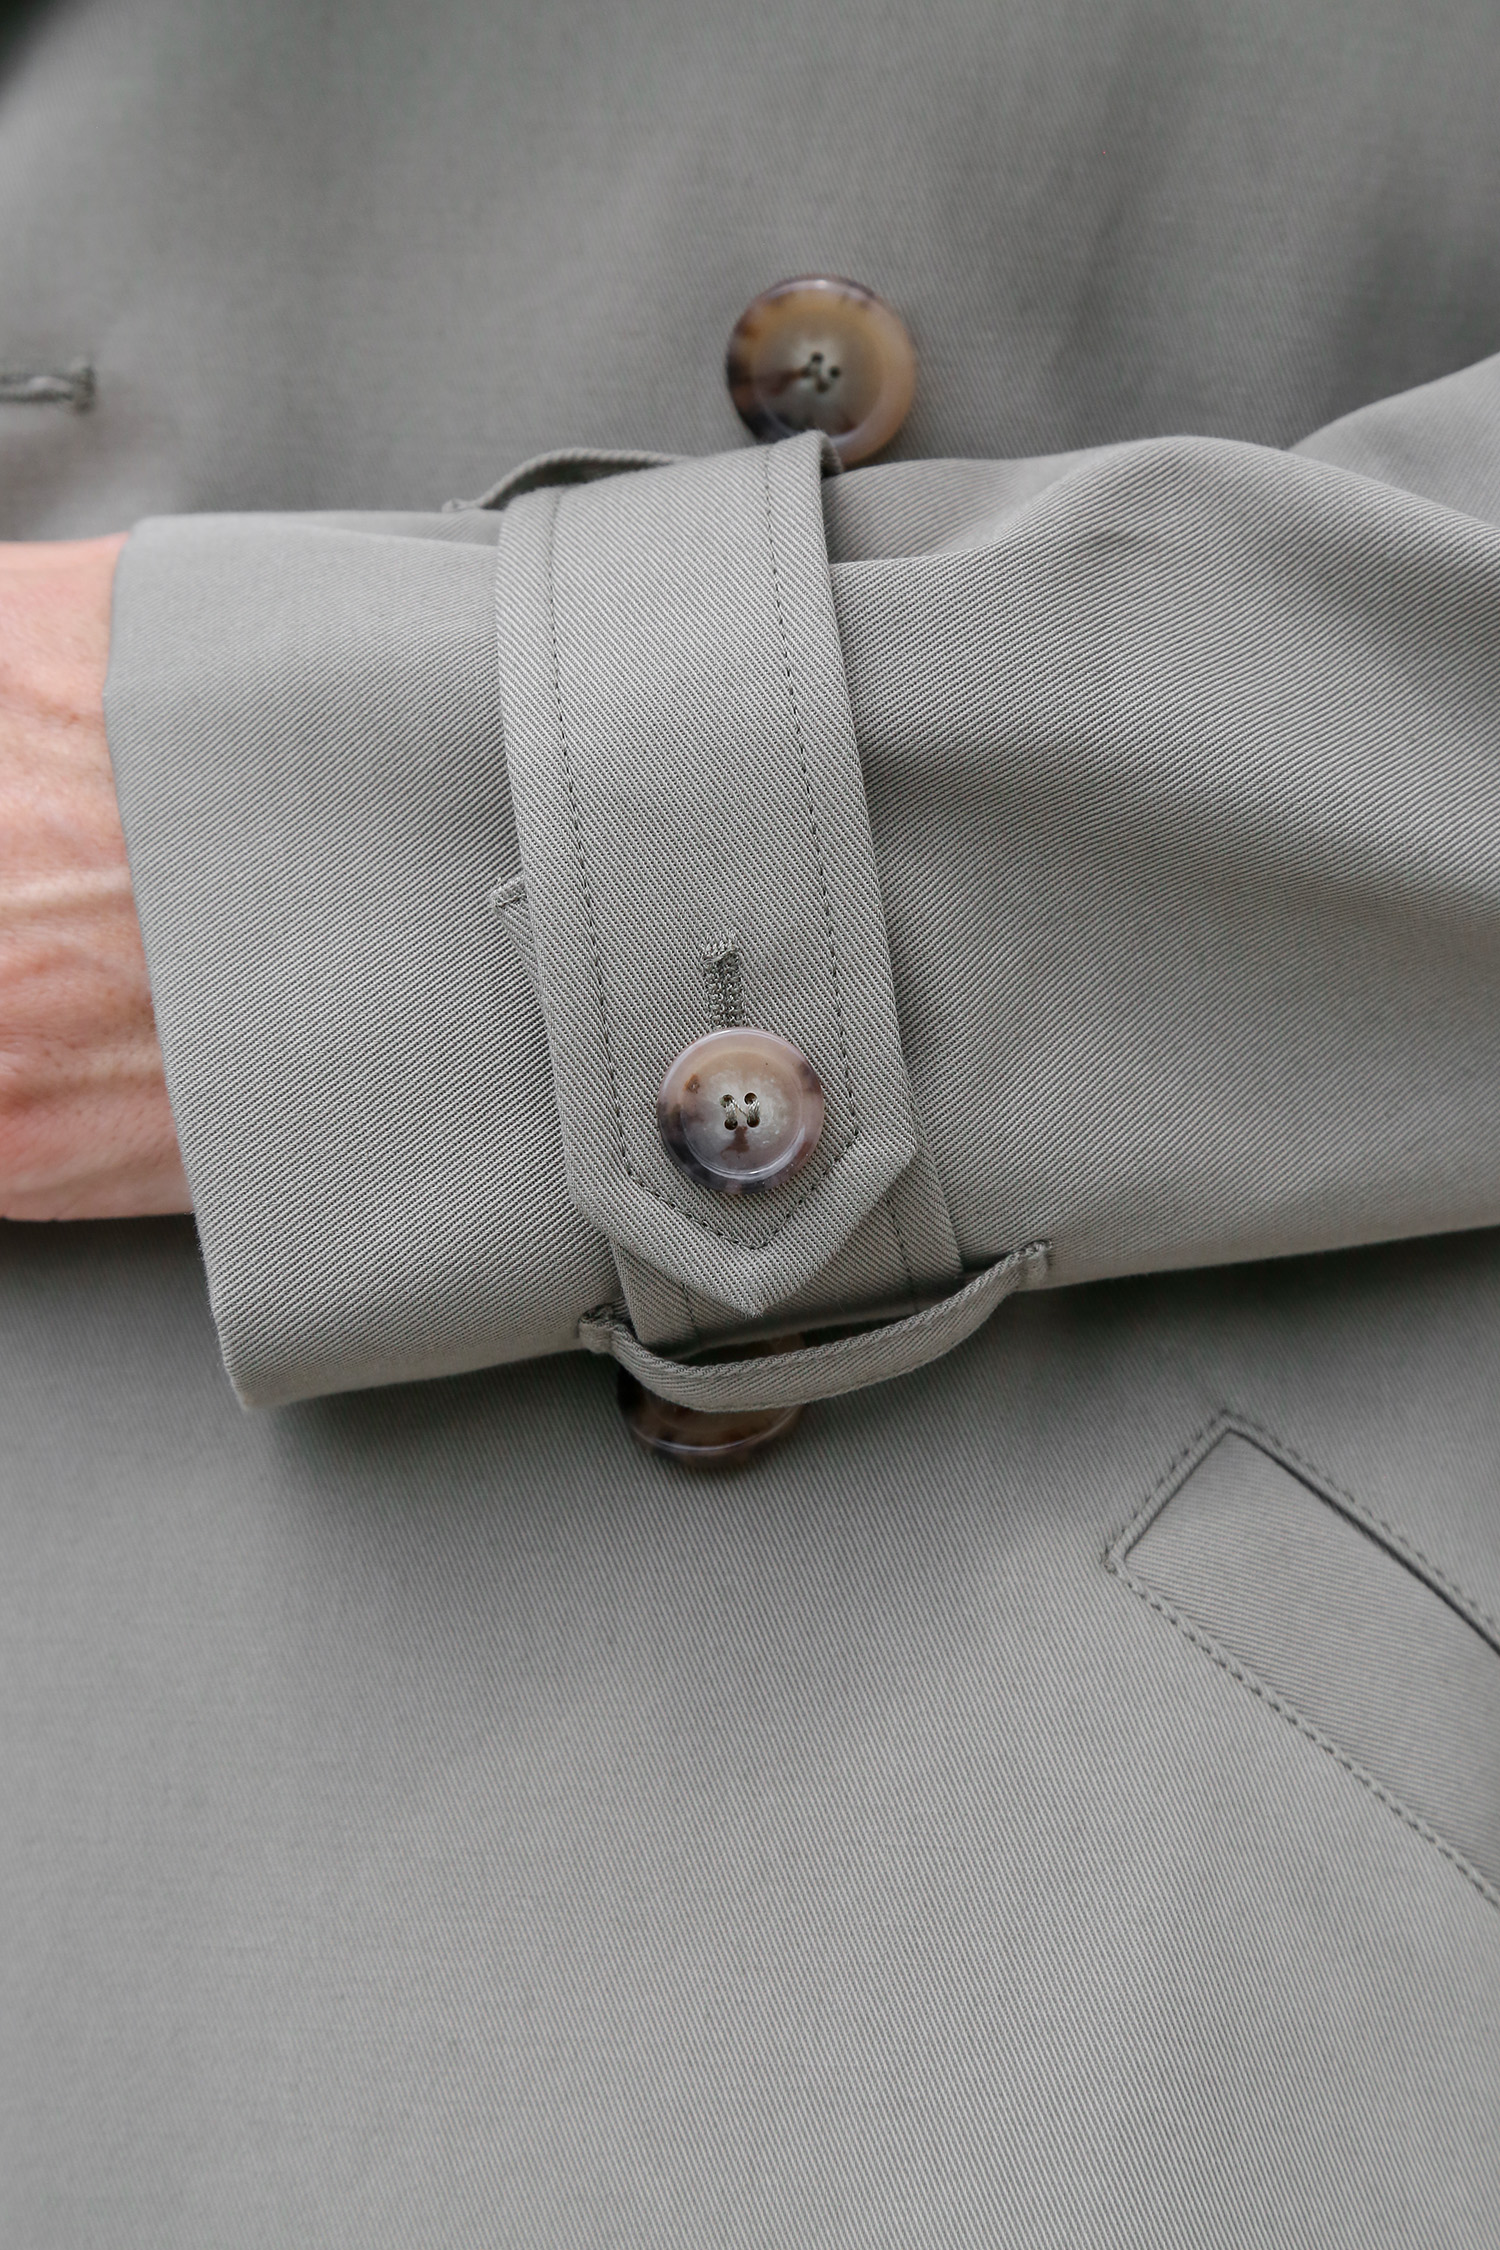 Trench coat jacket details